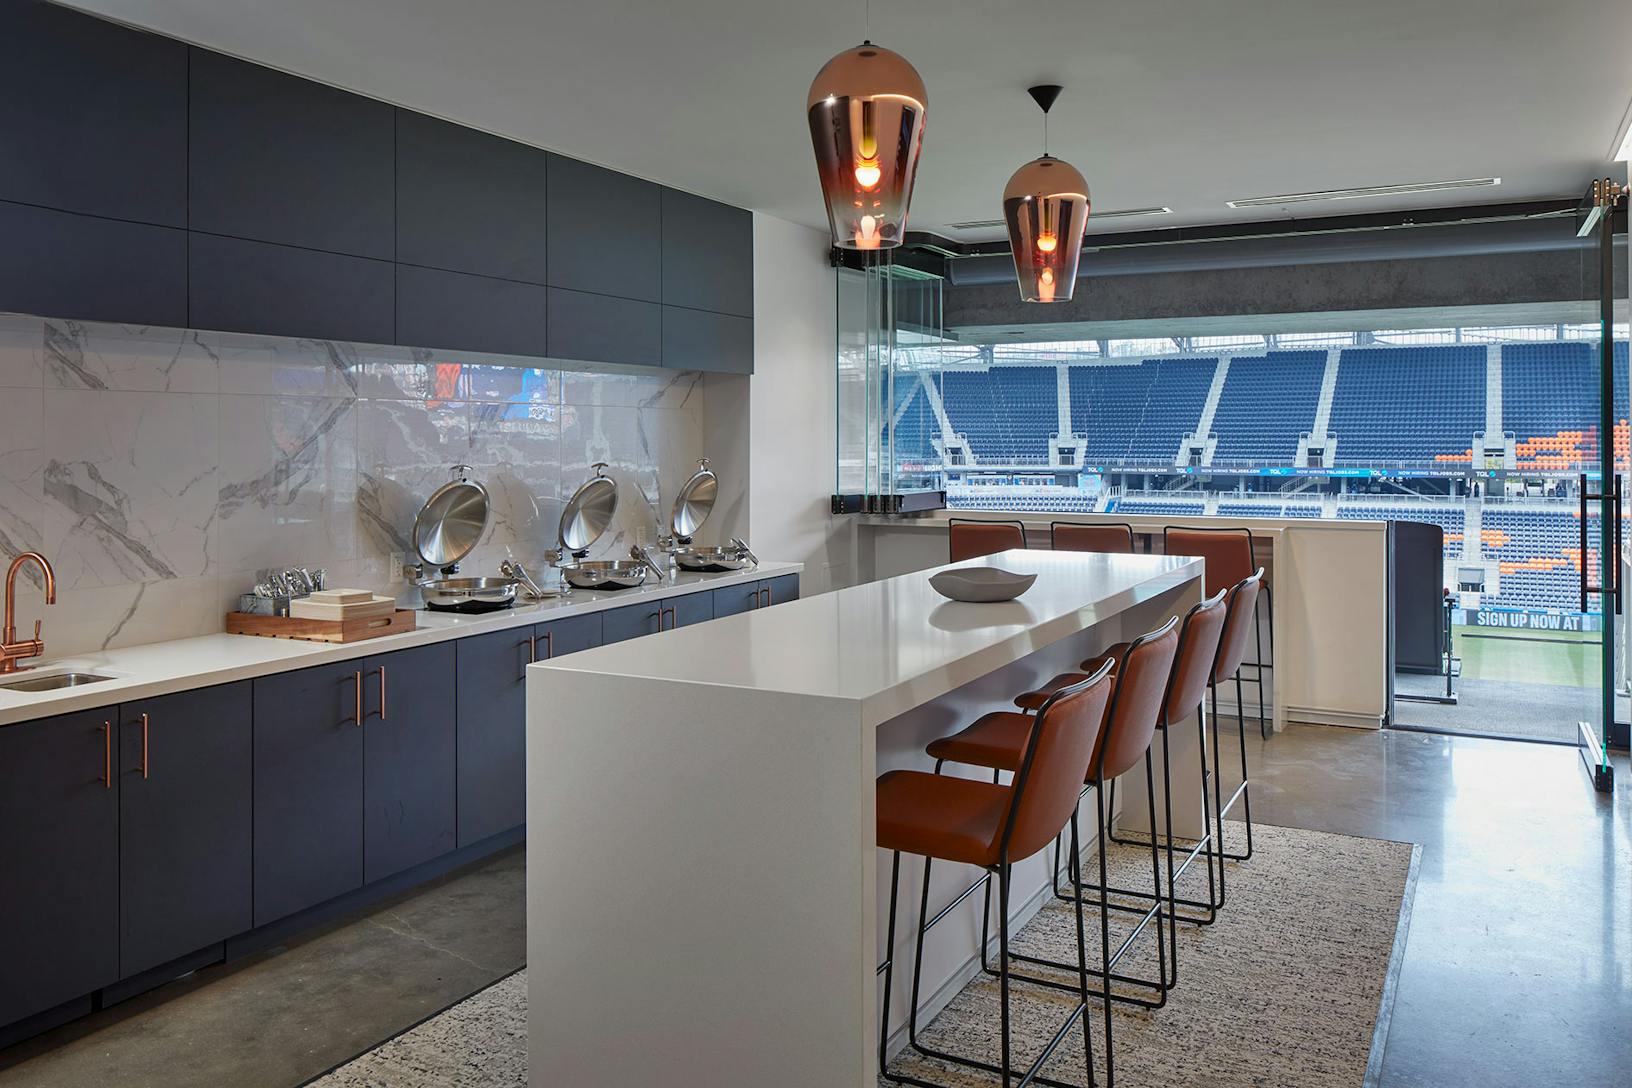 FC Cincinnati Stadium kitchen with large openings glass panels